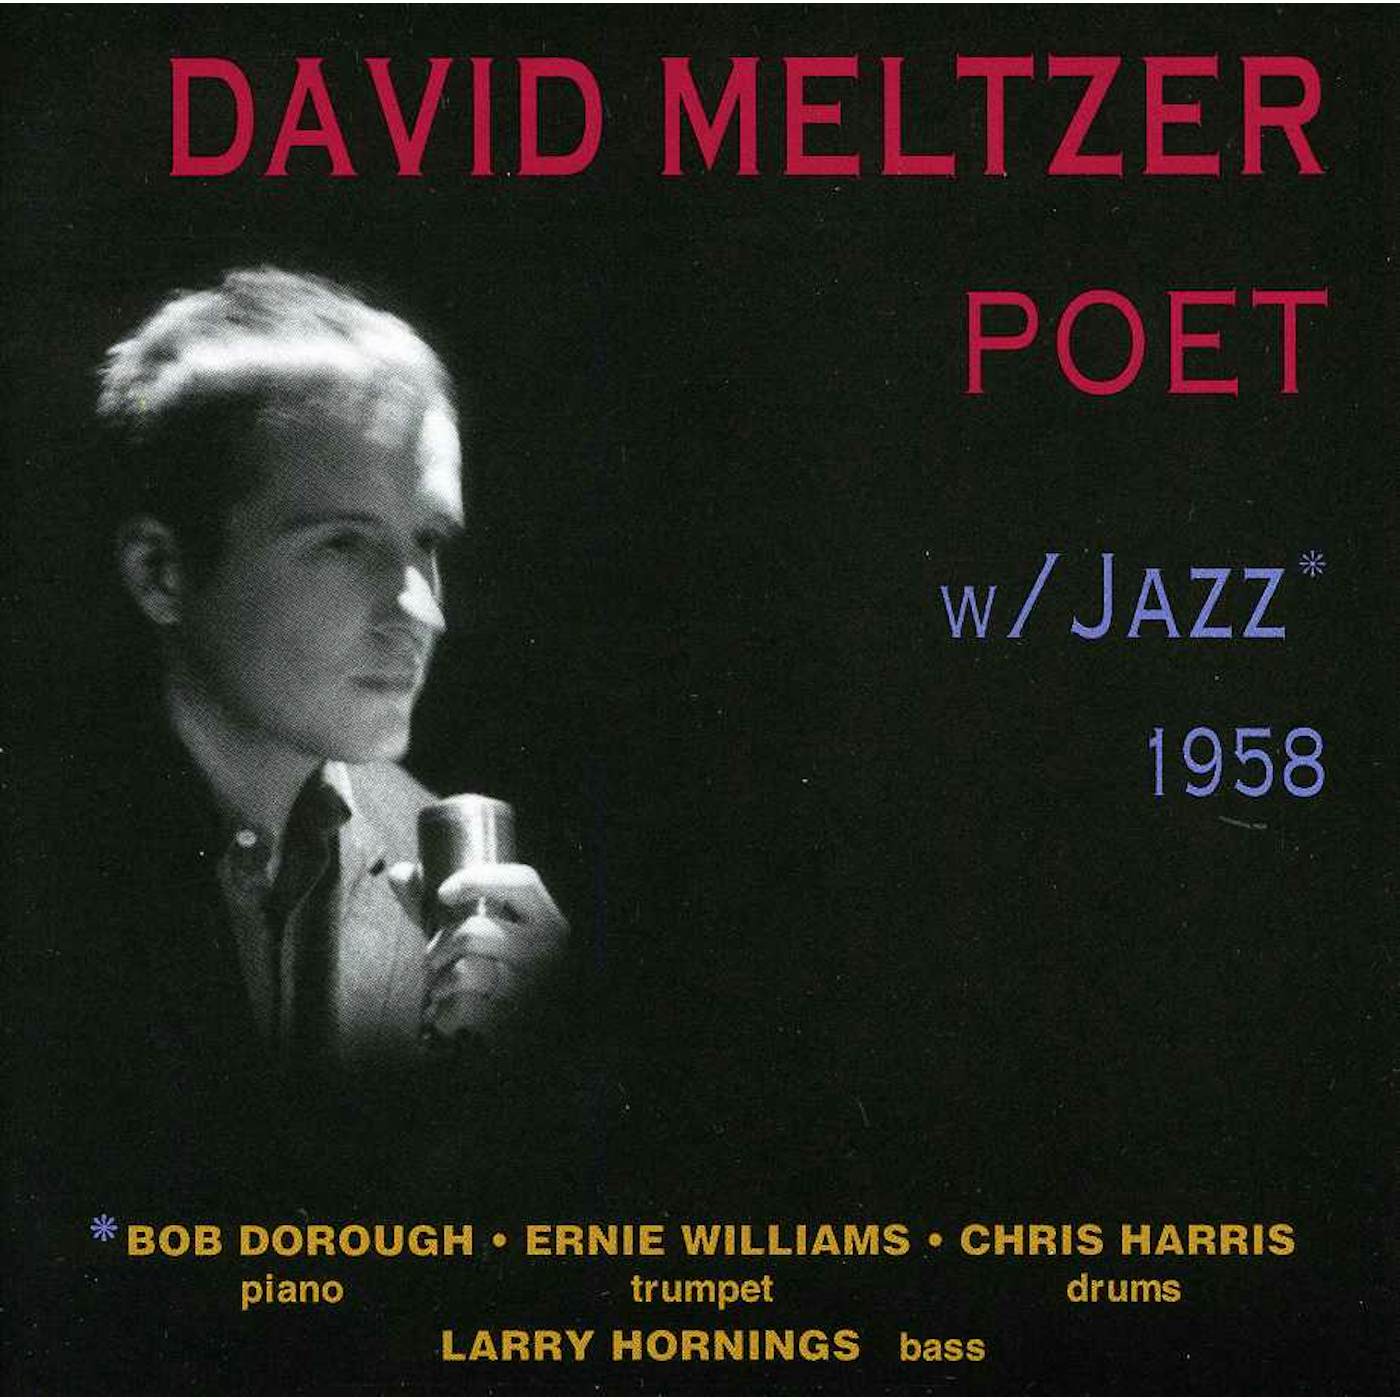 David Meltzer POET WITH JAZZ CD